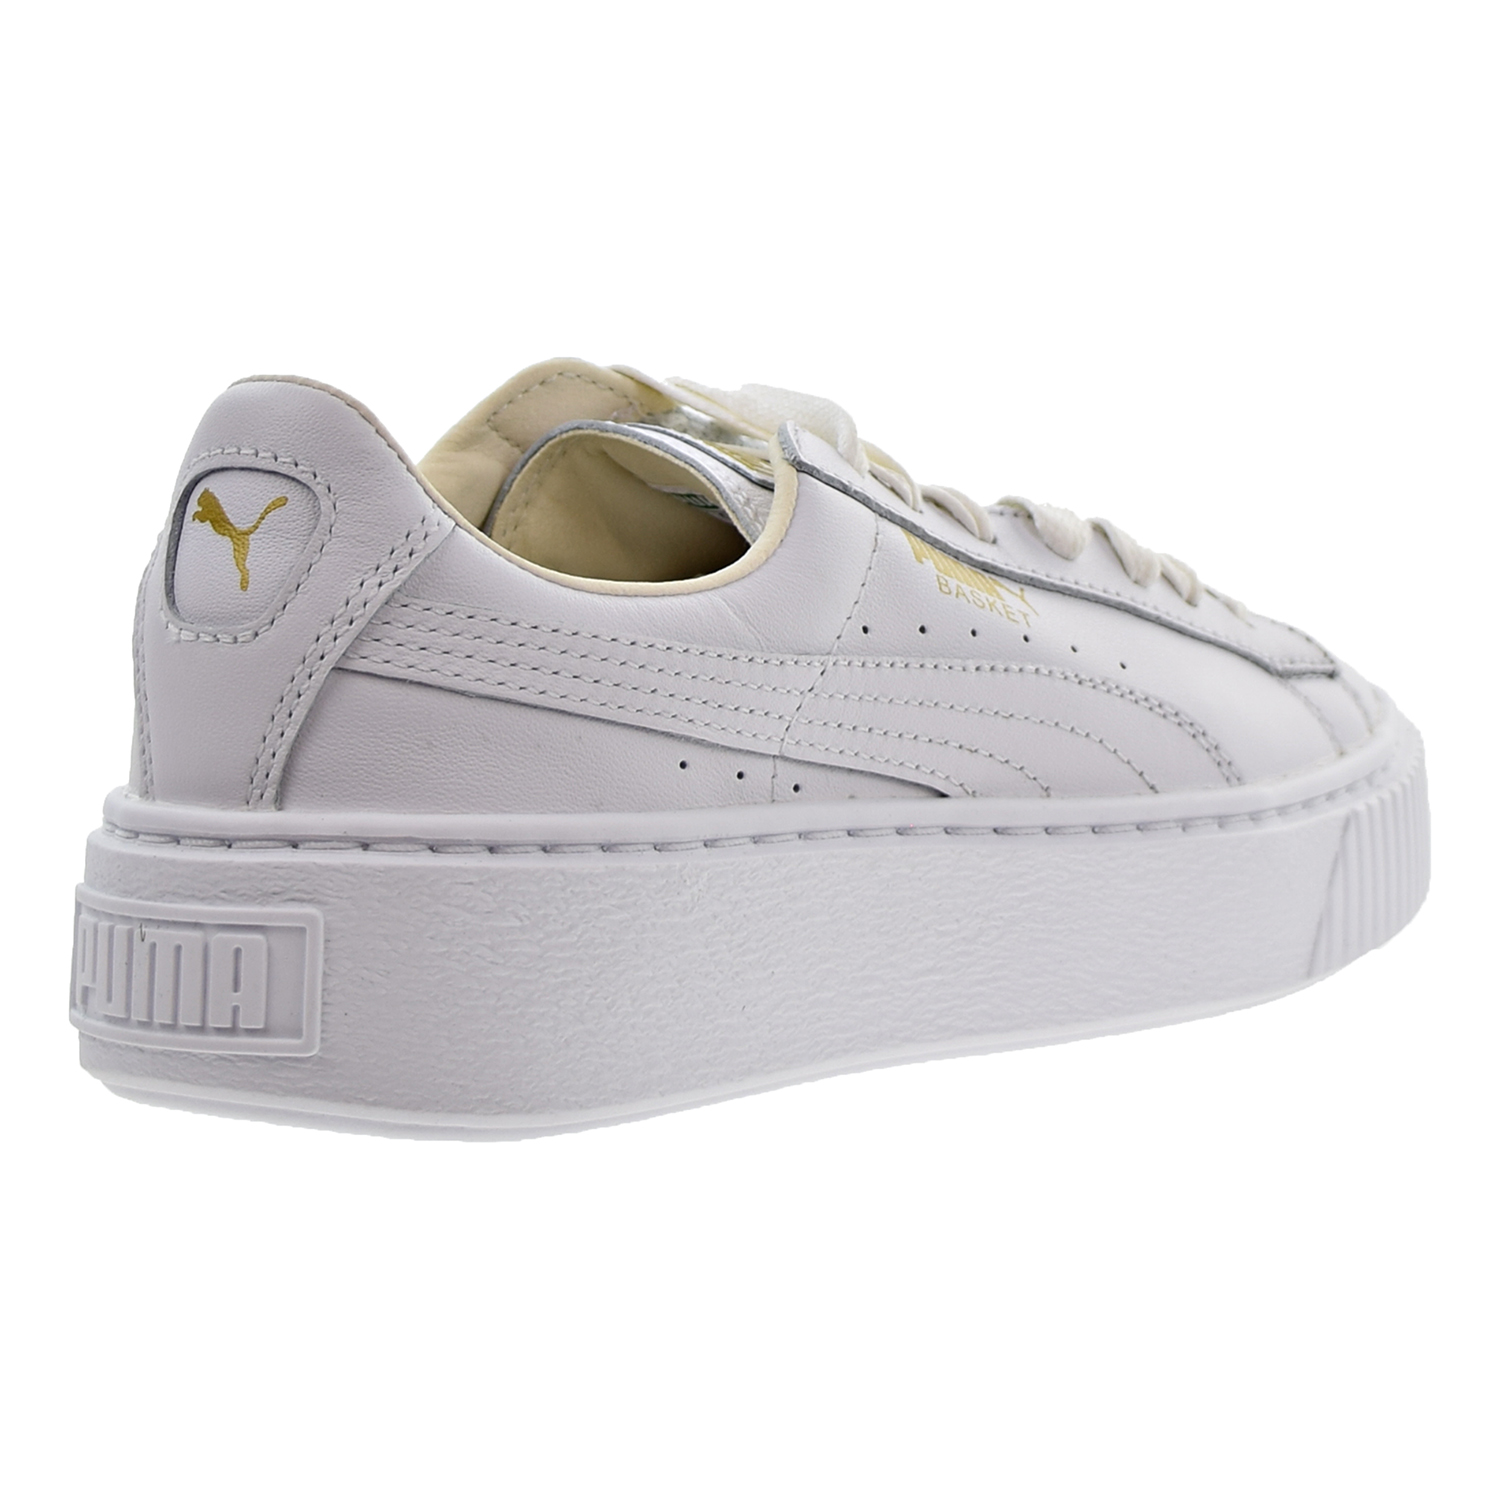 puma white gold shoes